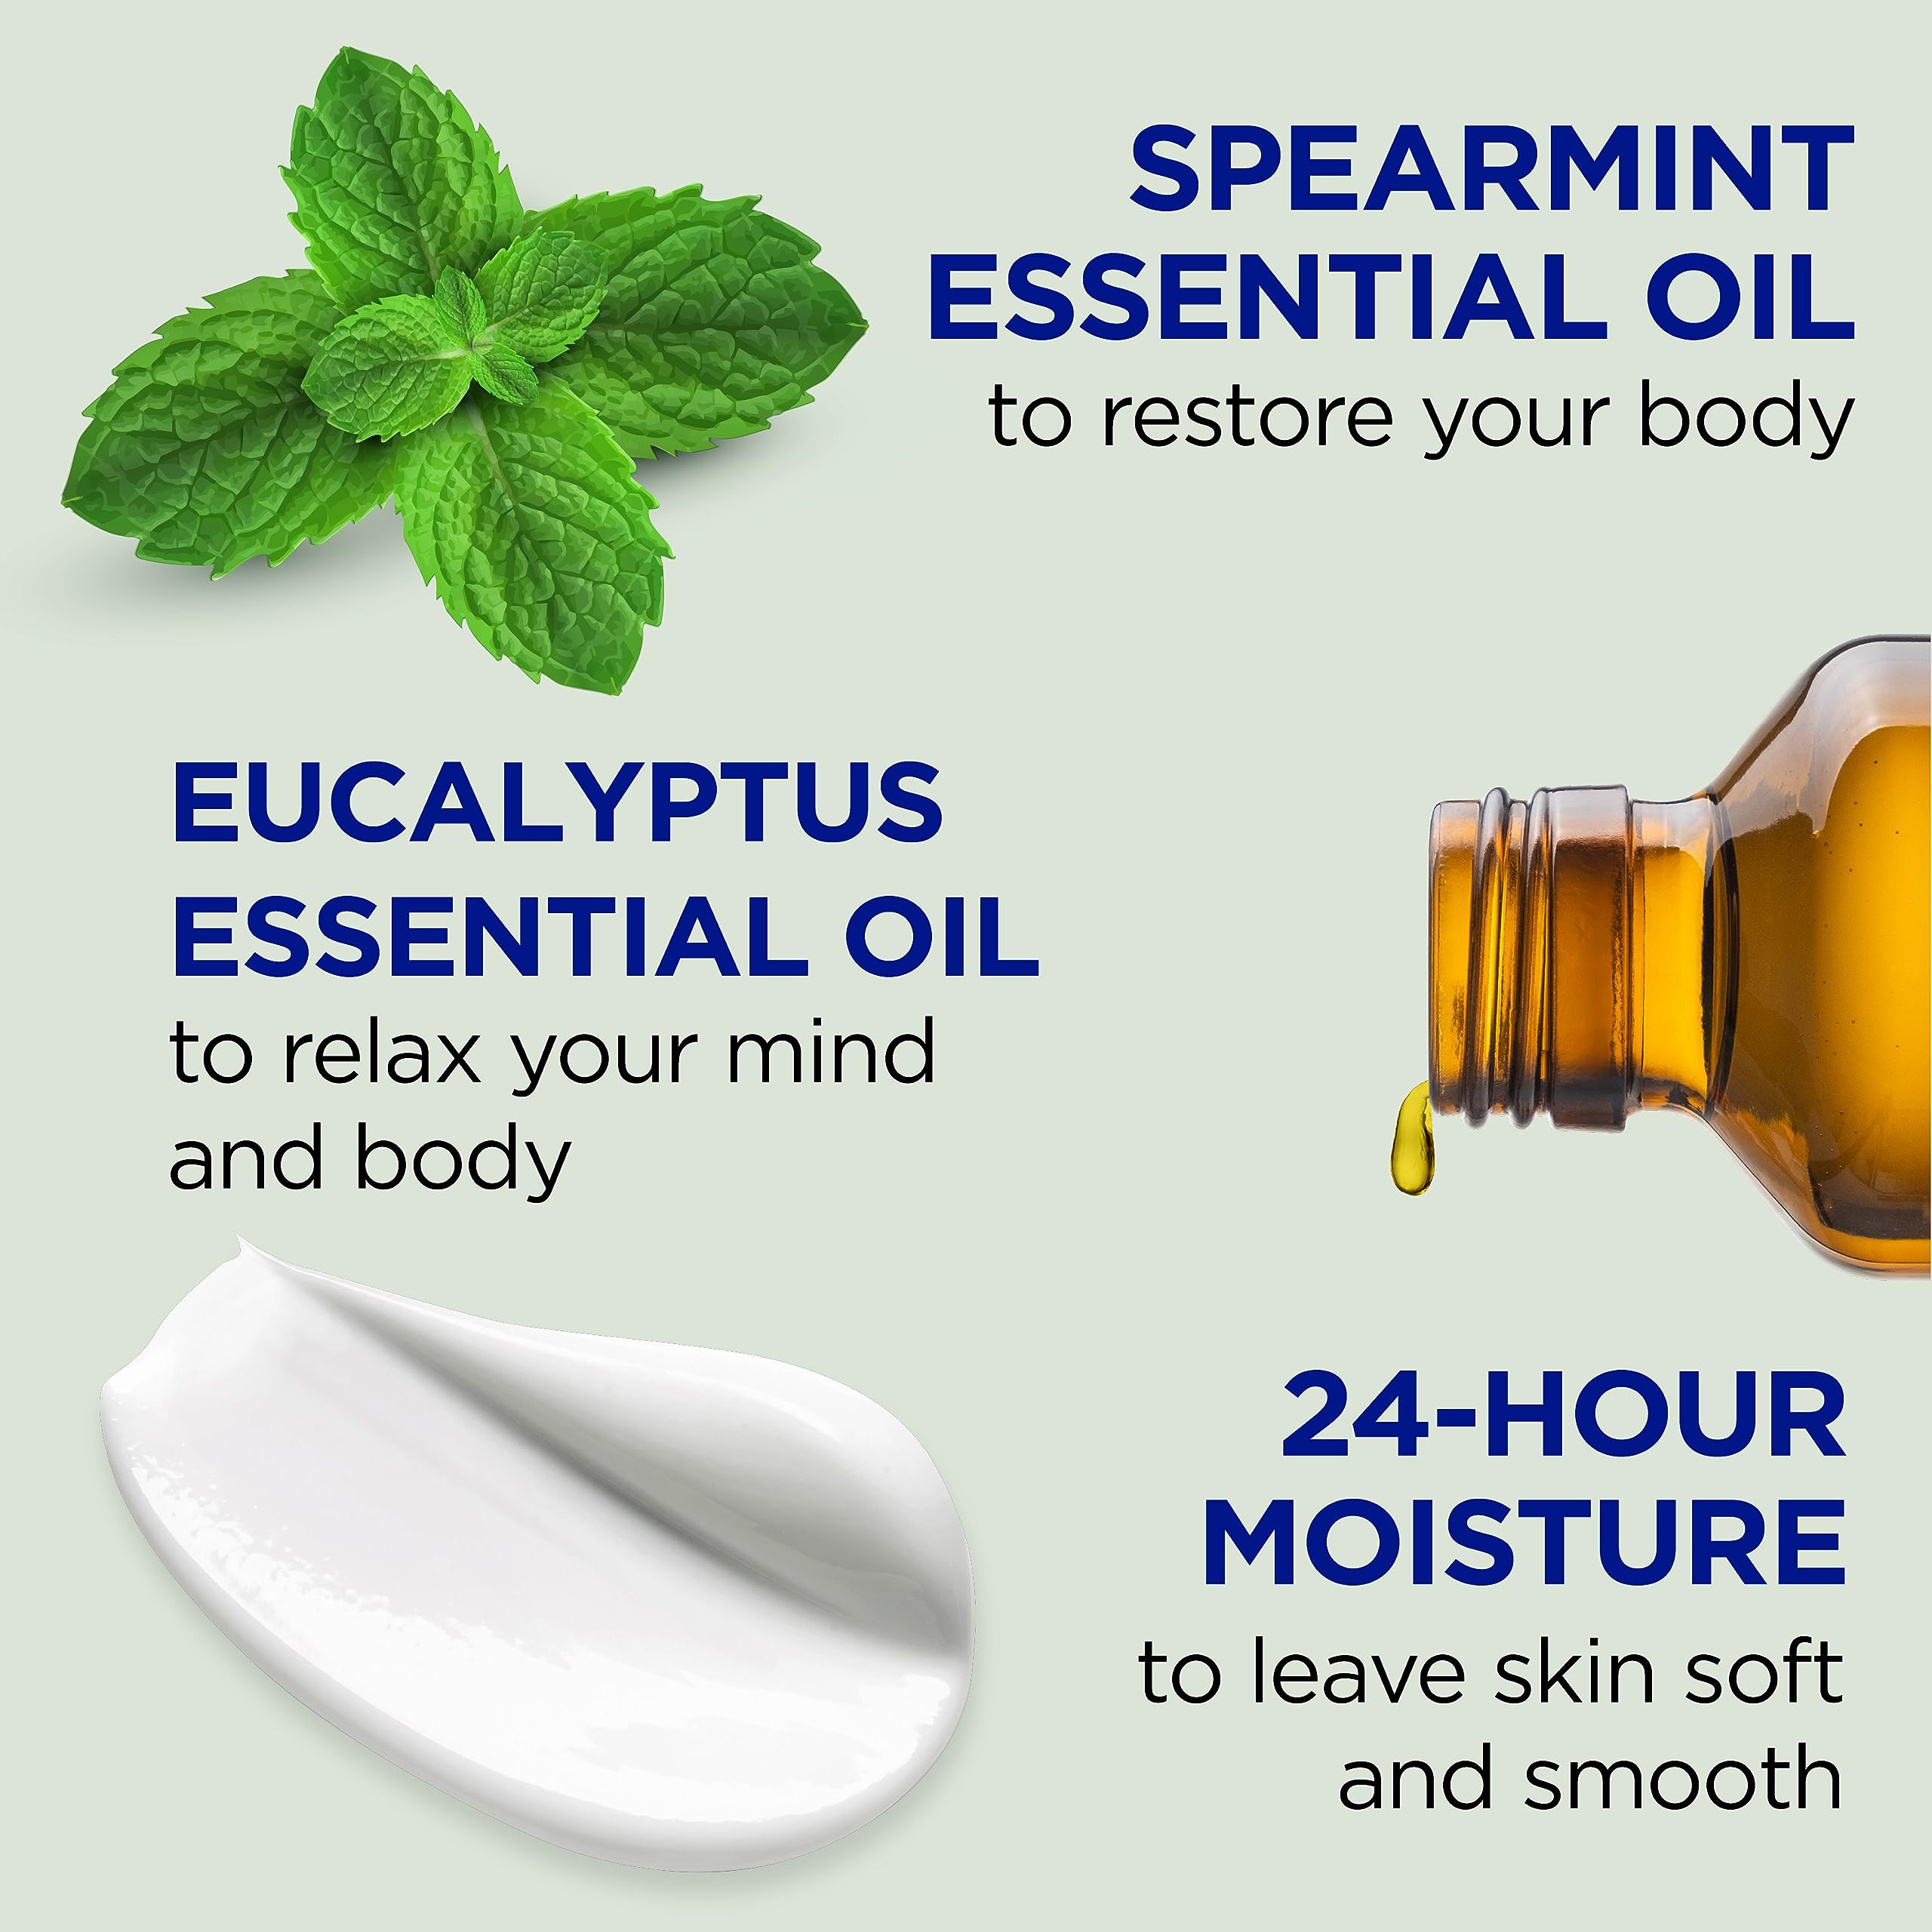 Dr Teal's Body Lotion, Eucalyptus & Spearmint & Essential Oils, 18 fl oz (Pack of 3)